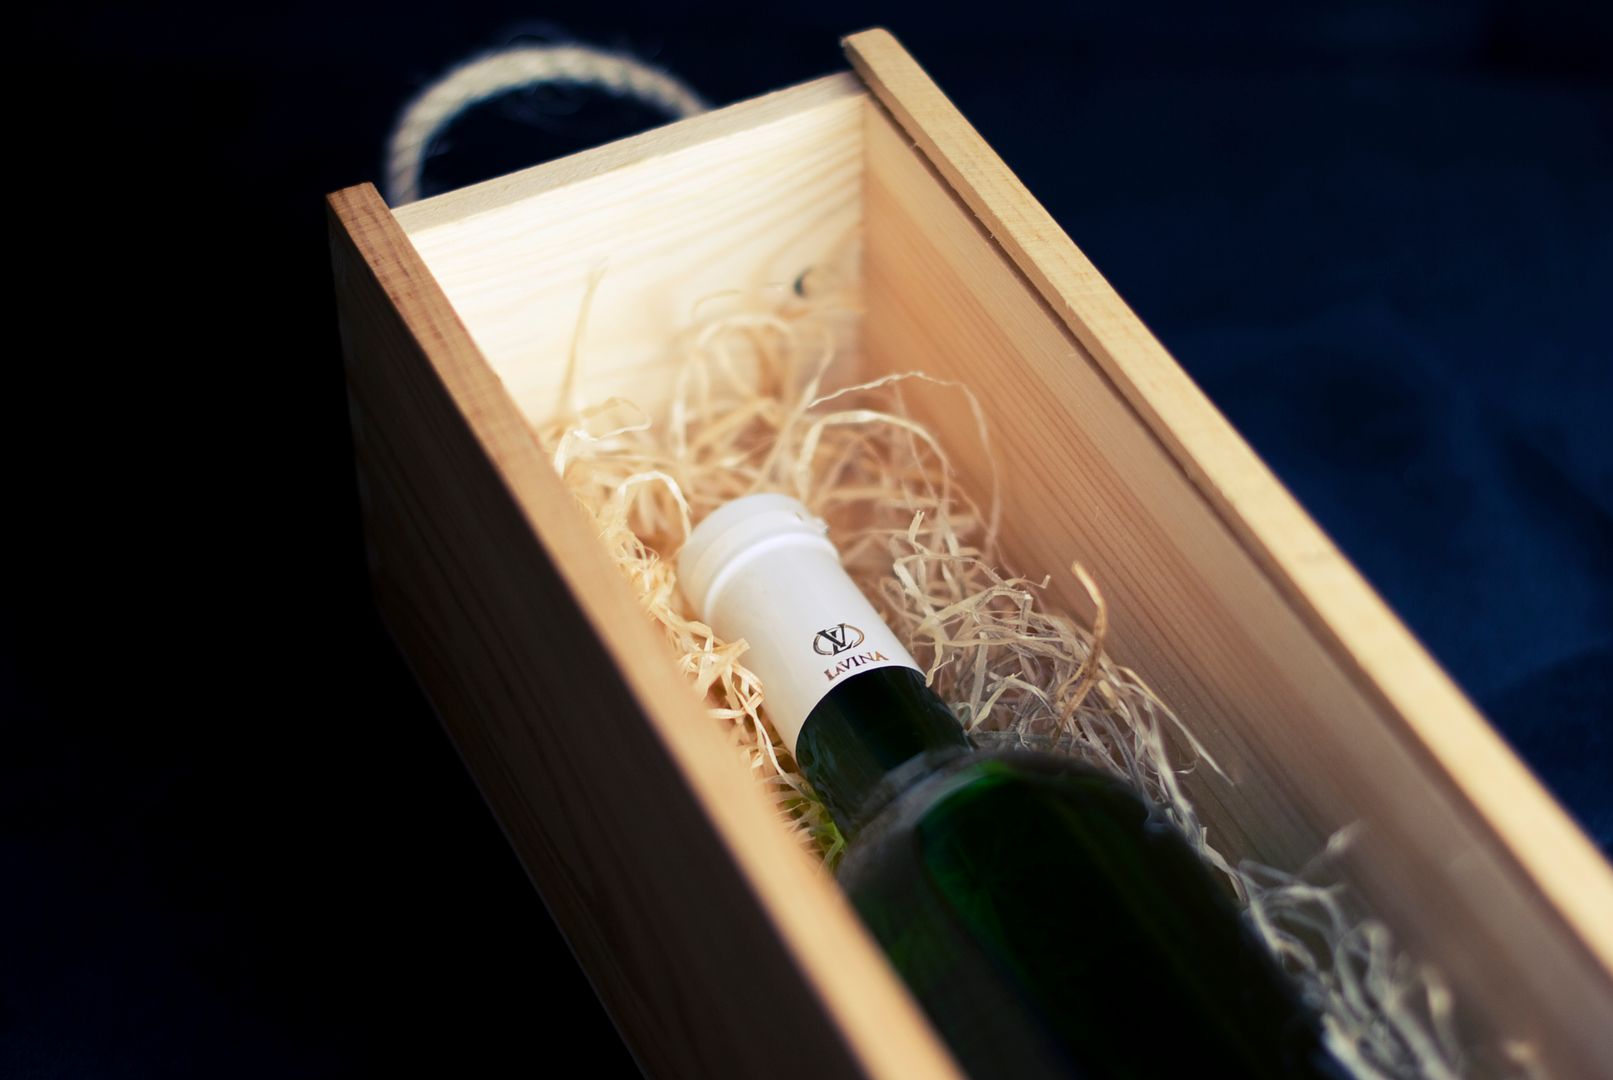  photo wine-box-bottle-case wijn.jpg